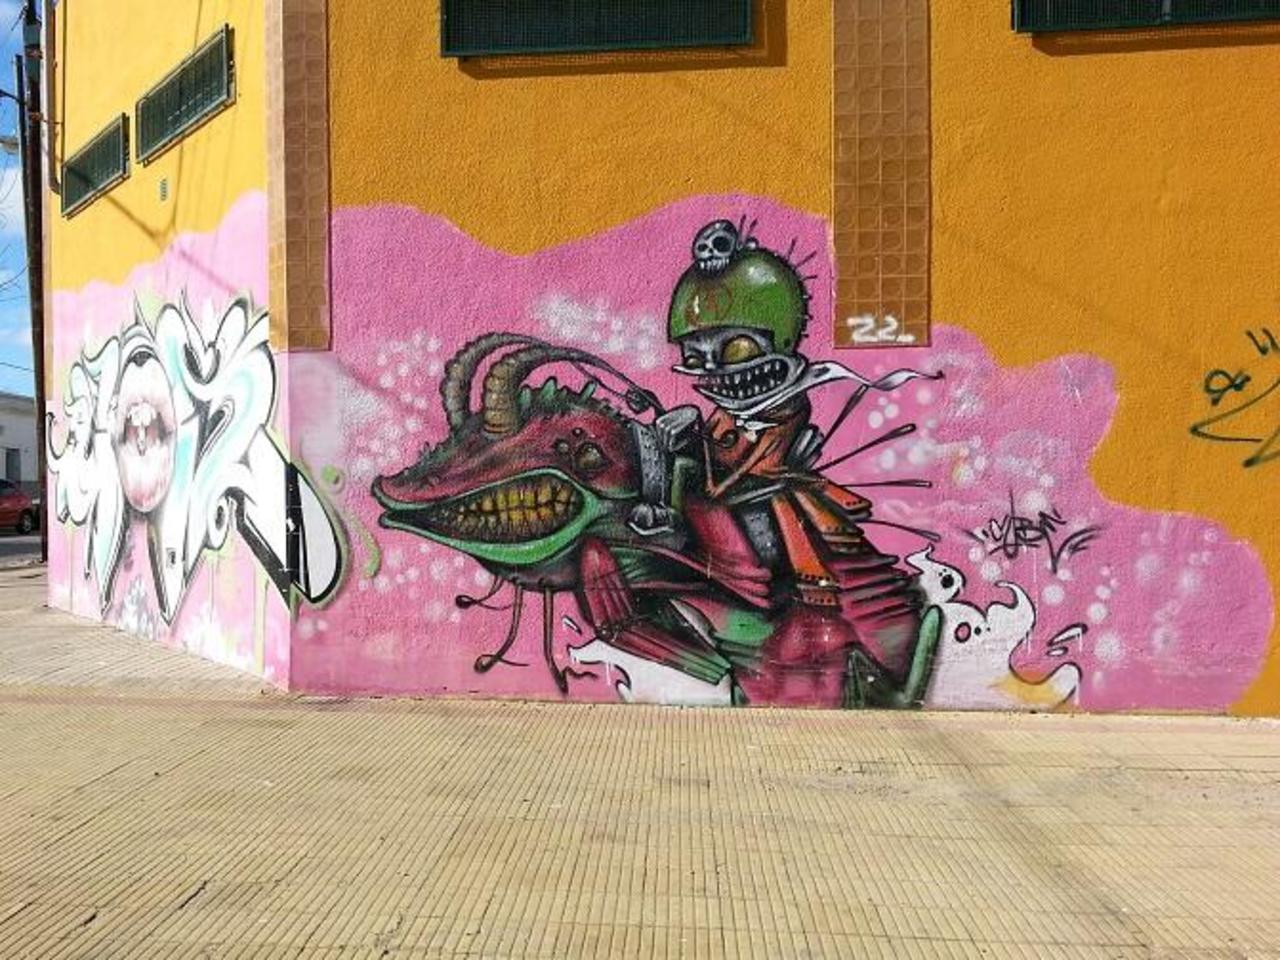 RT @GraffitiLP: RT: @DickieRandrup #Graffiti de hoy:<riding insects>calles 66y23 #LaPlata #Argentina #StreetArt #UrbanArt #ArteUrbano http://t.co/3urwlklotG